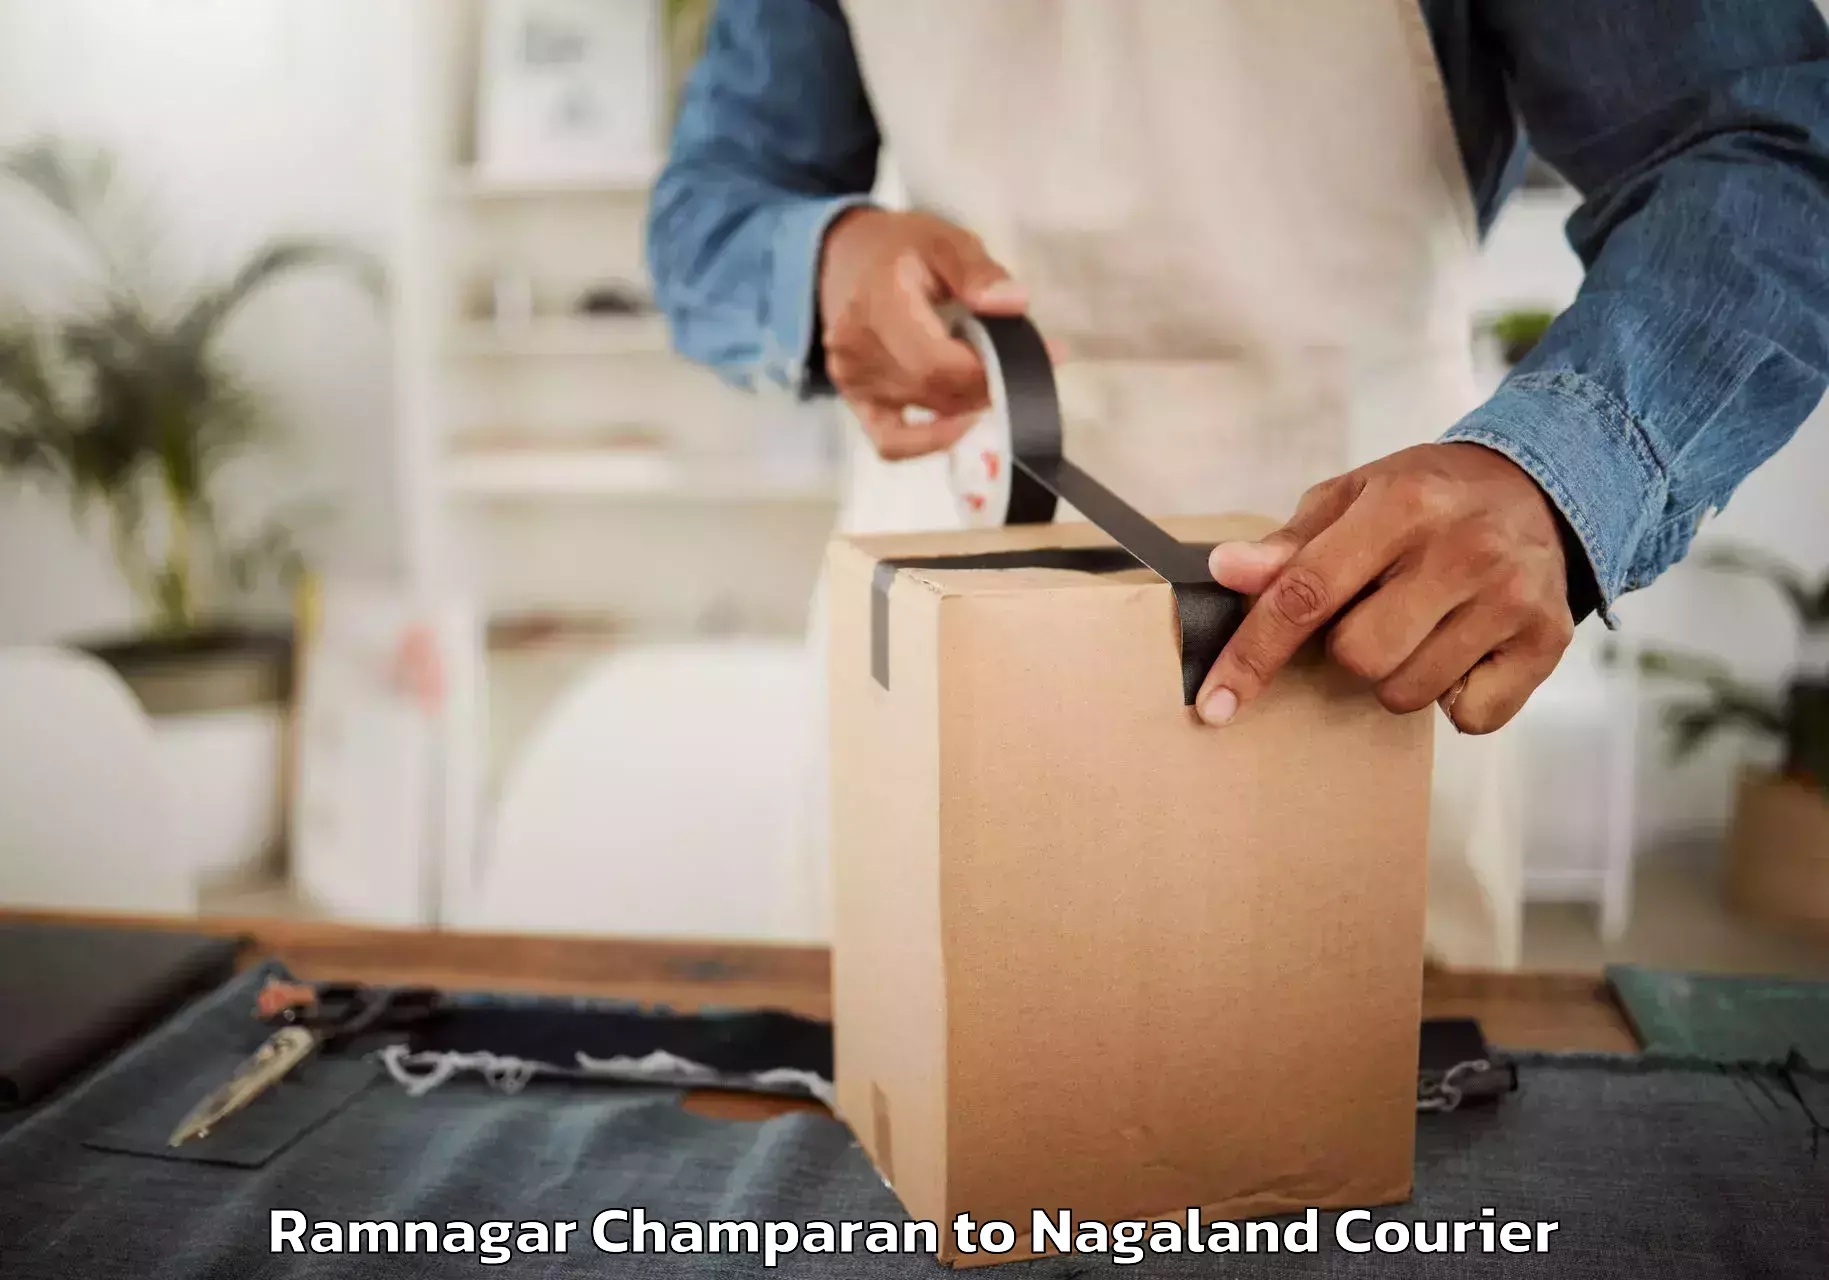 Furniture transport company Ramnagar Champaran to Dimapur